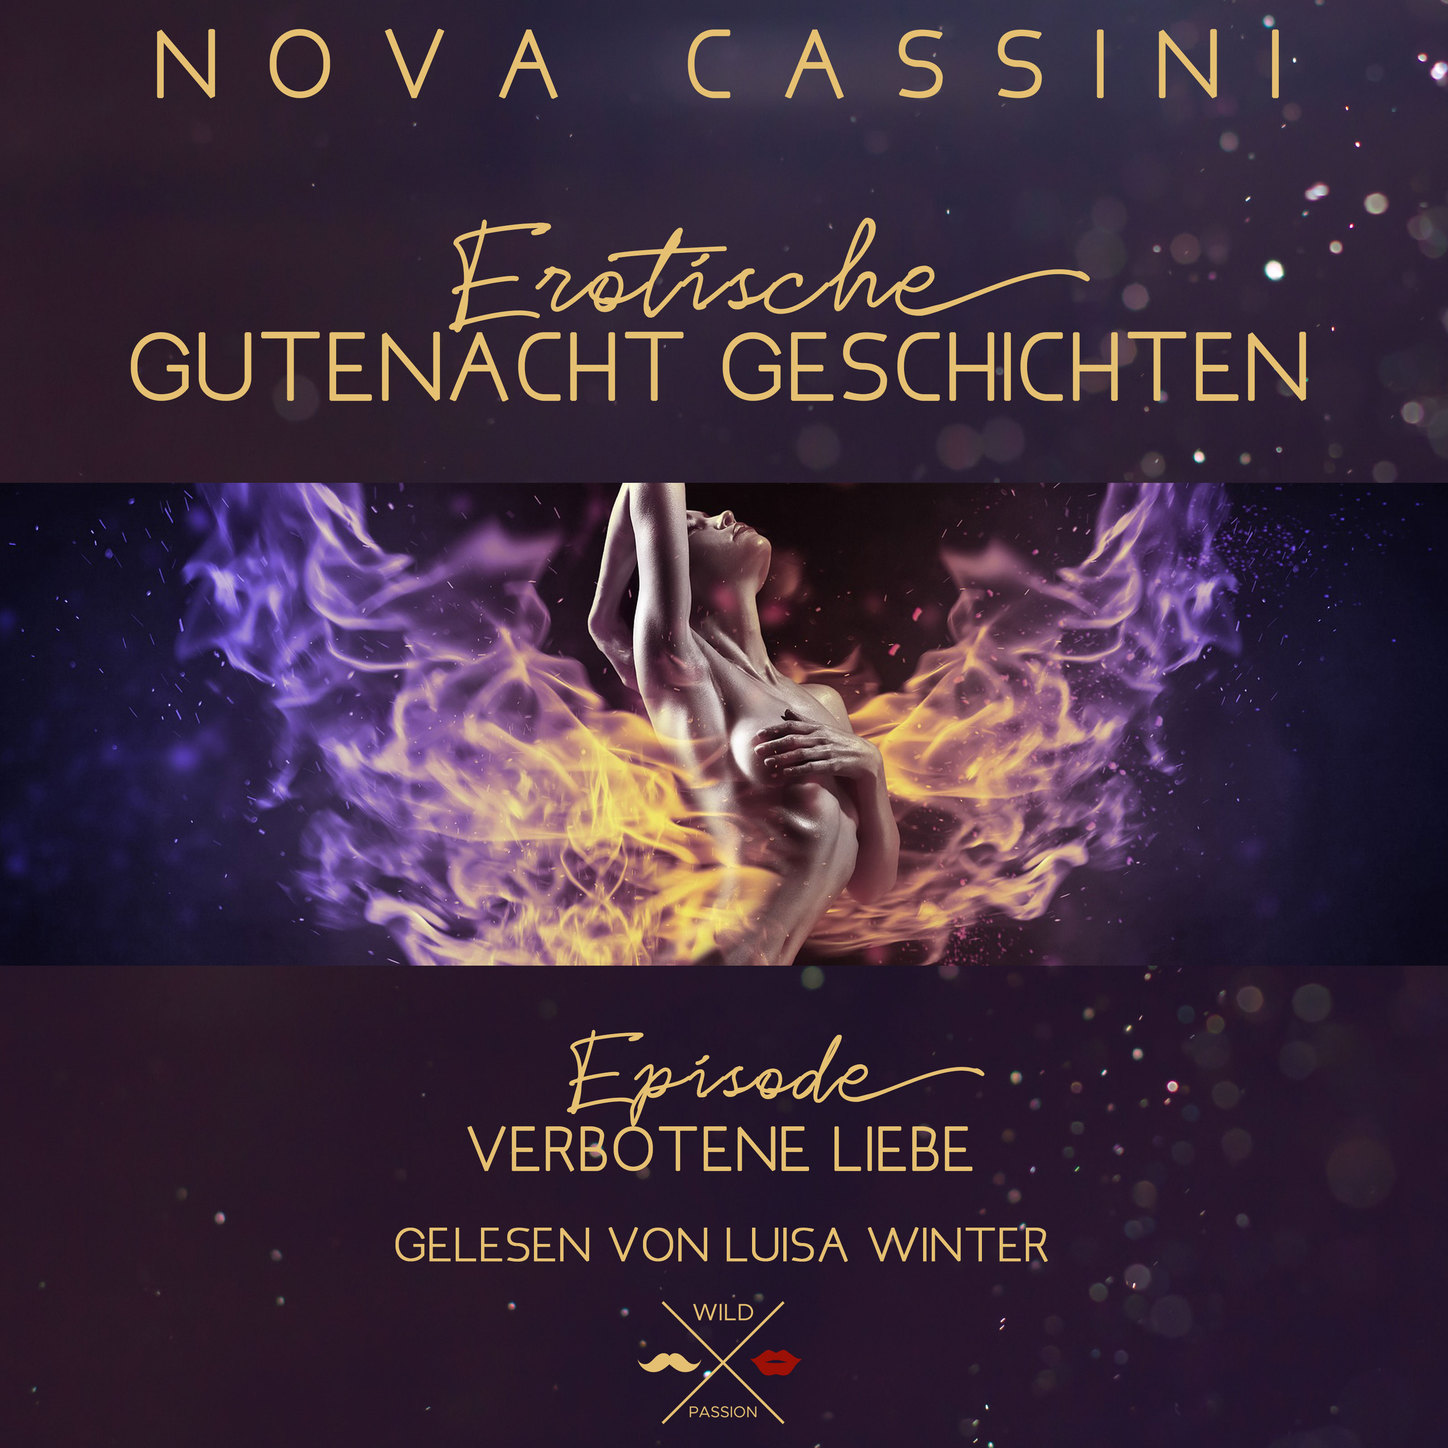 Скачать Verbotene Liebe - Erotische Gutenacht Geschichten, Band 5 (ungekürzt) - Nova Cassini